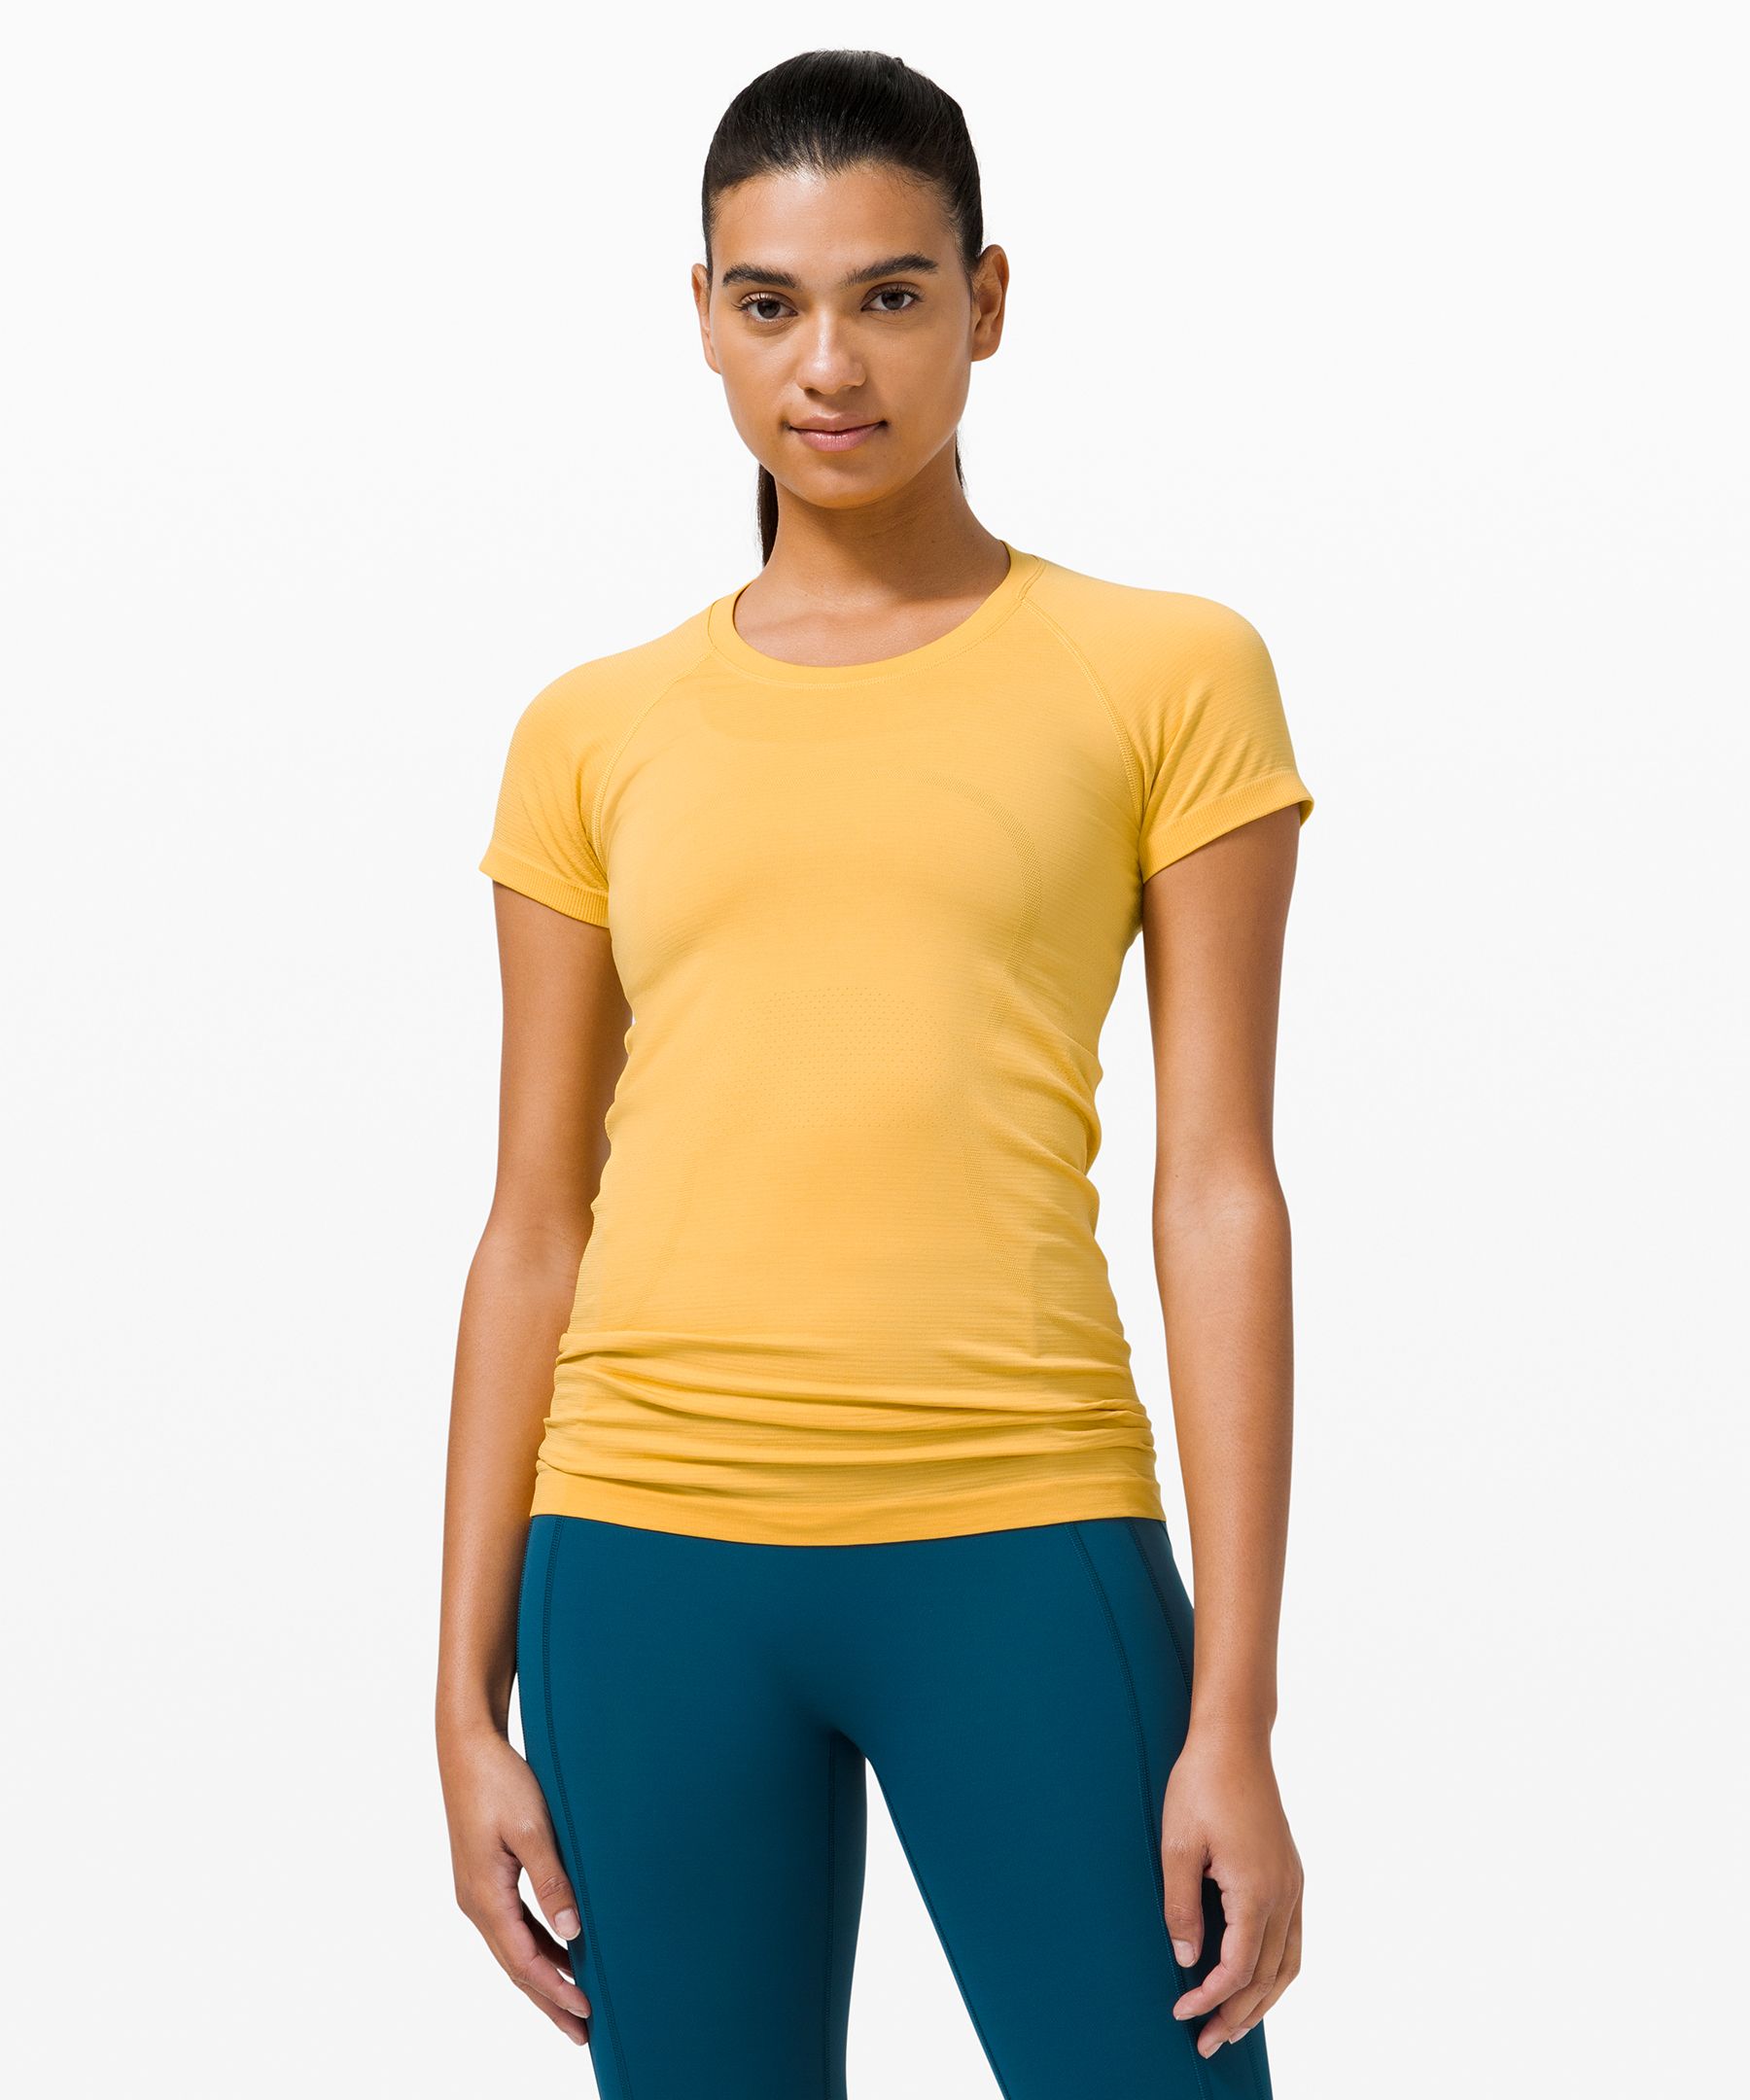 Lululemon Swiftly Tech Short Sleeve Shirt 2.0 In Yellow